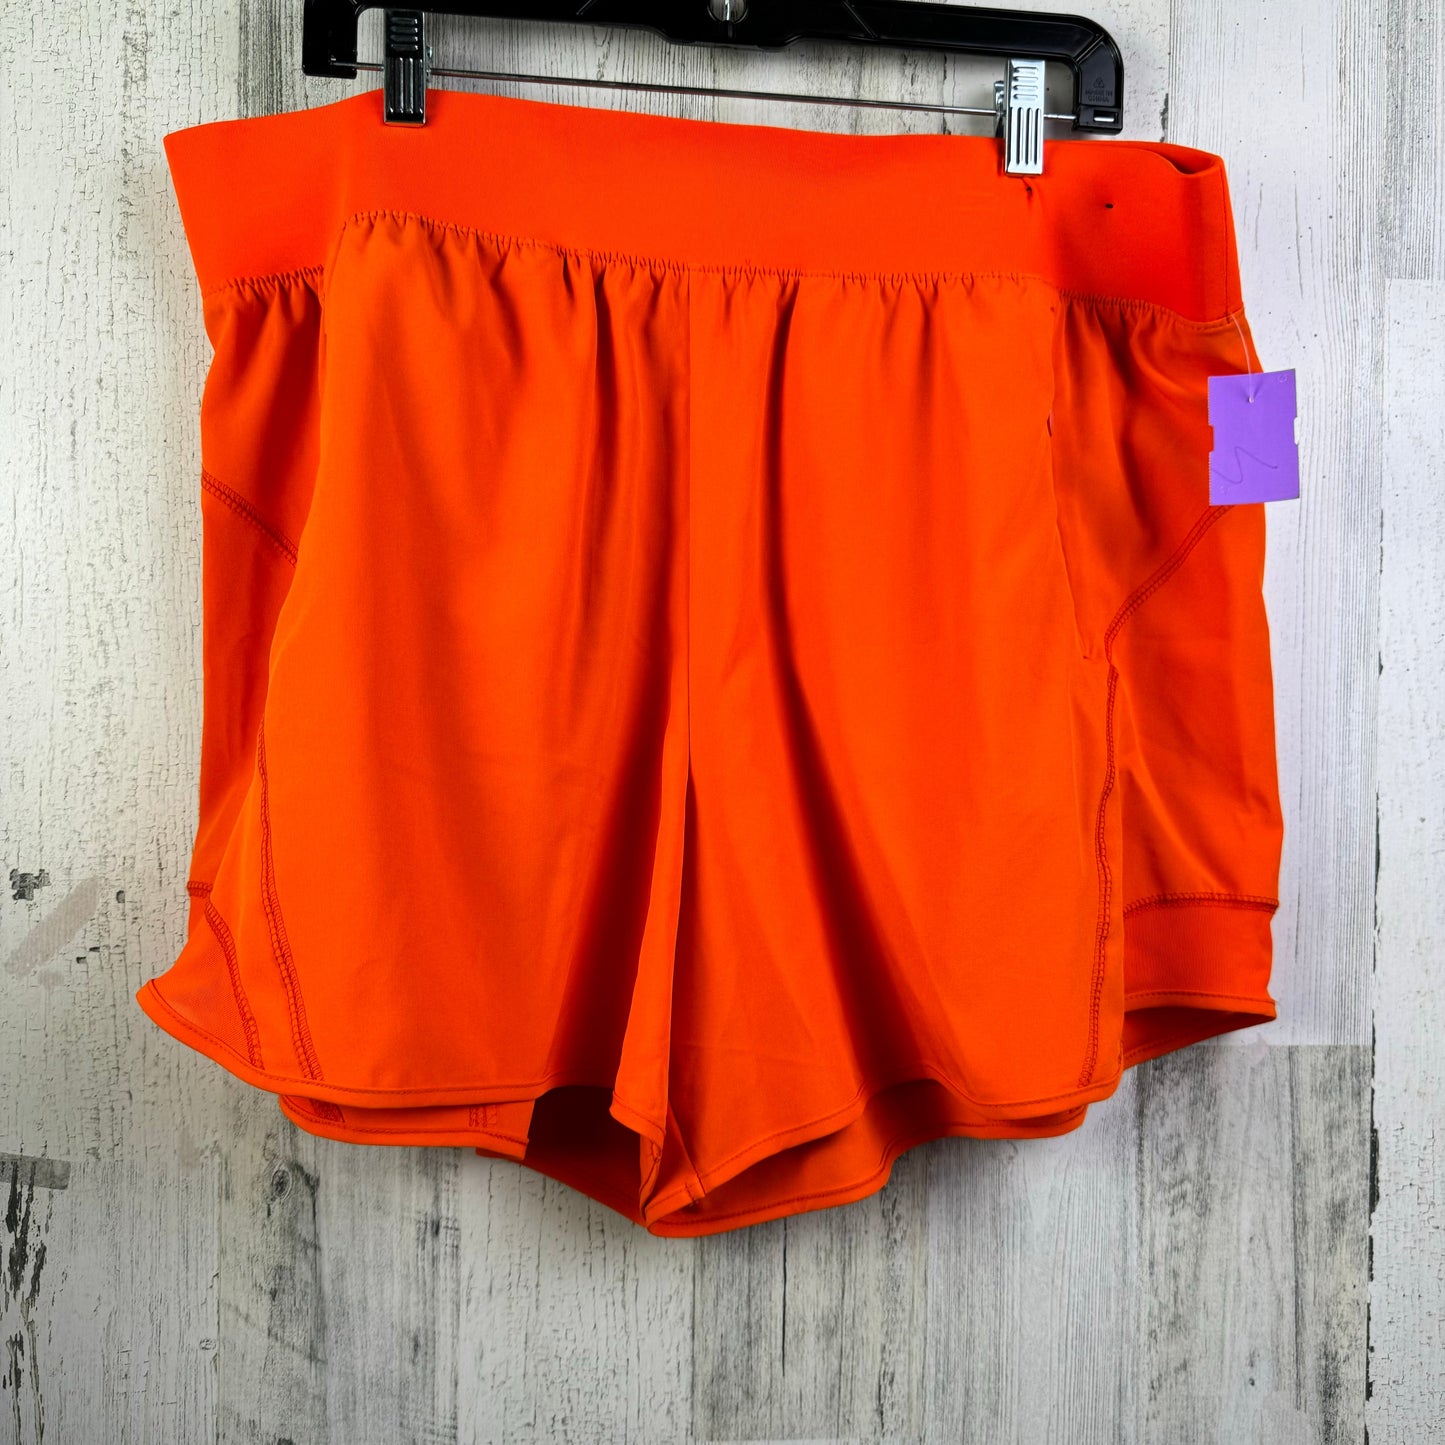 Orange Athletic Shorts Tek Gear, Size 1x